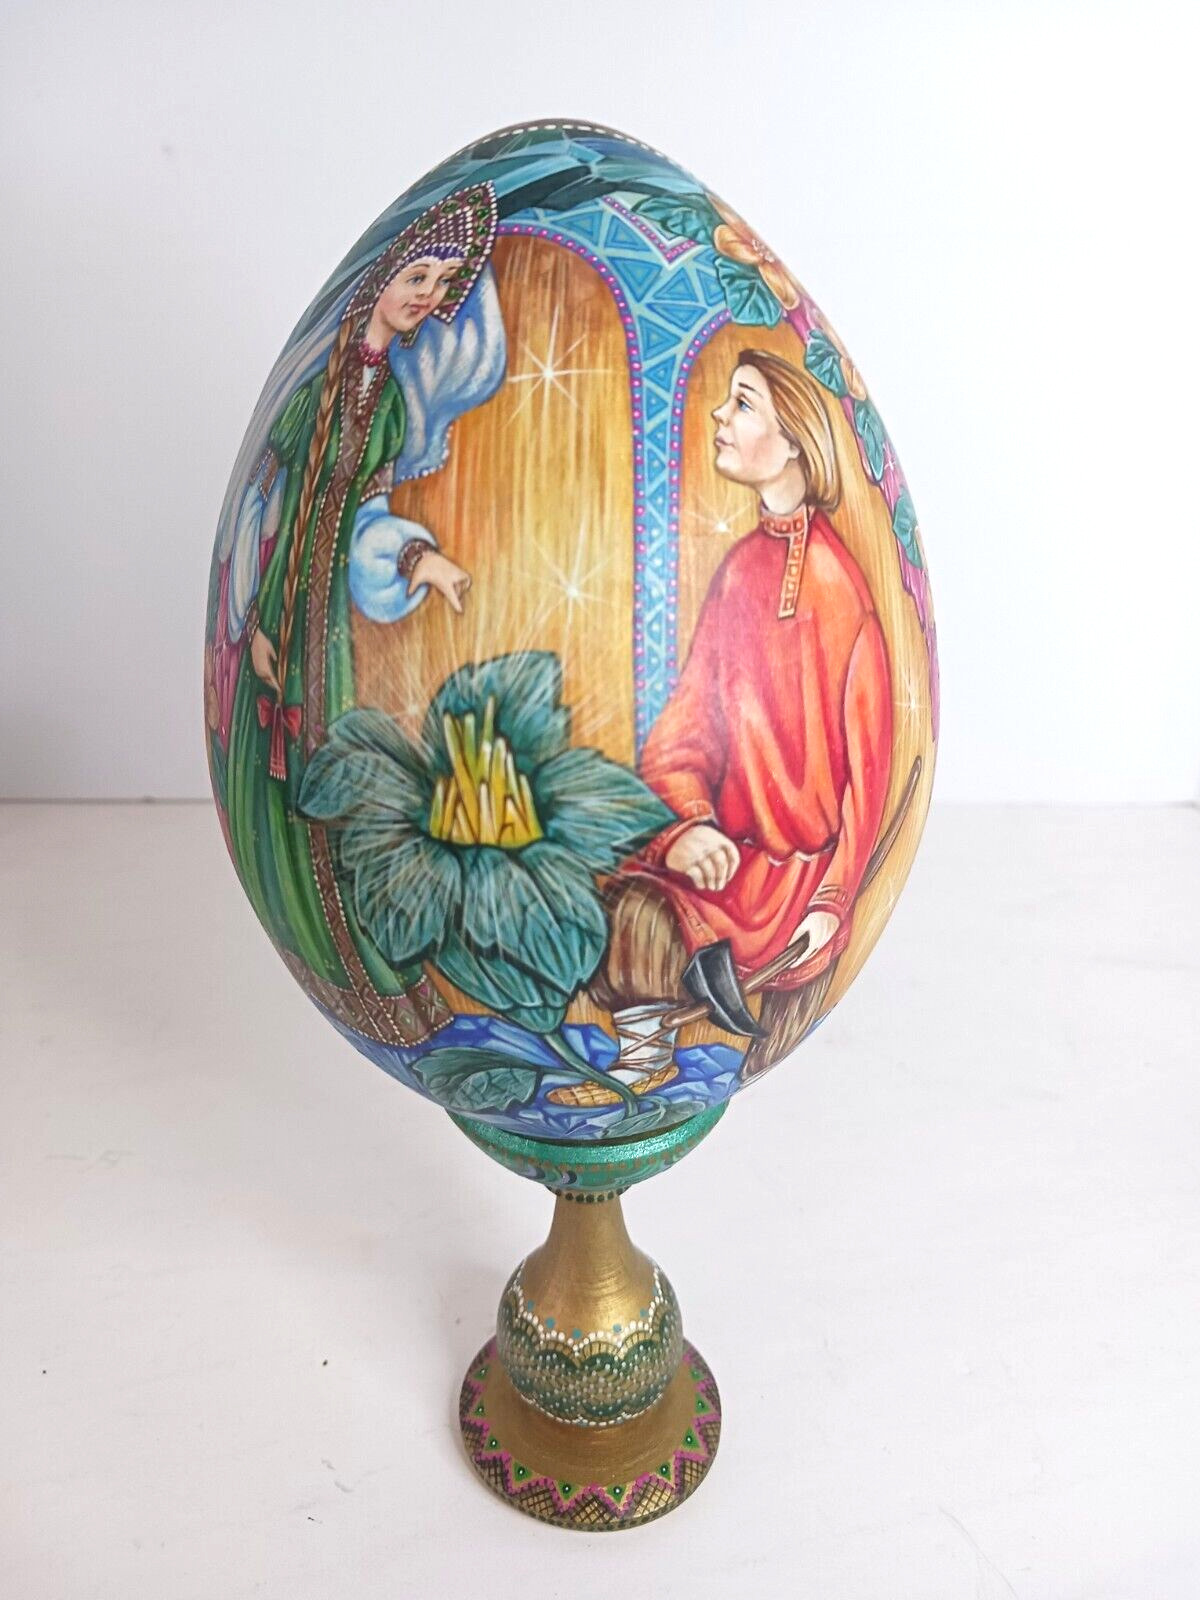 Handpainted Wooden Egg, Fairytale Motif, Russia